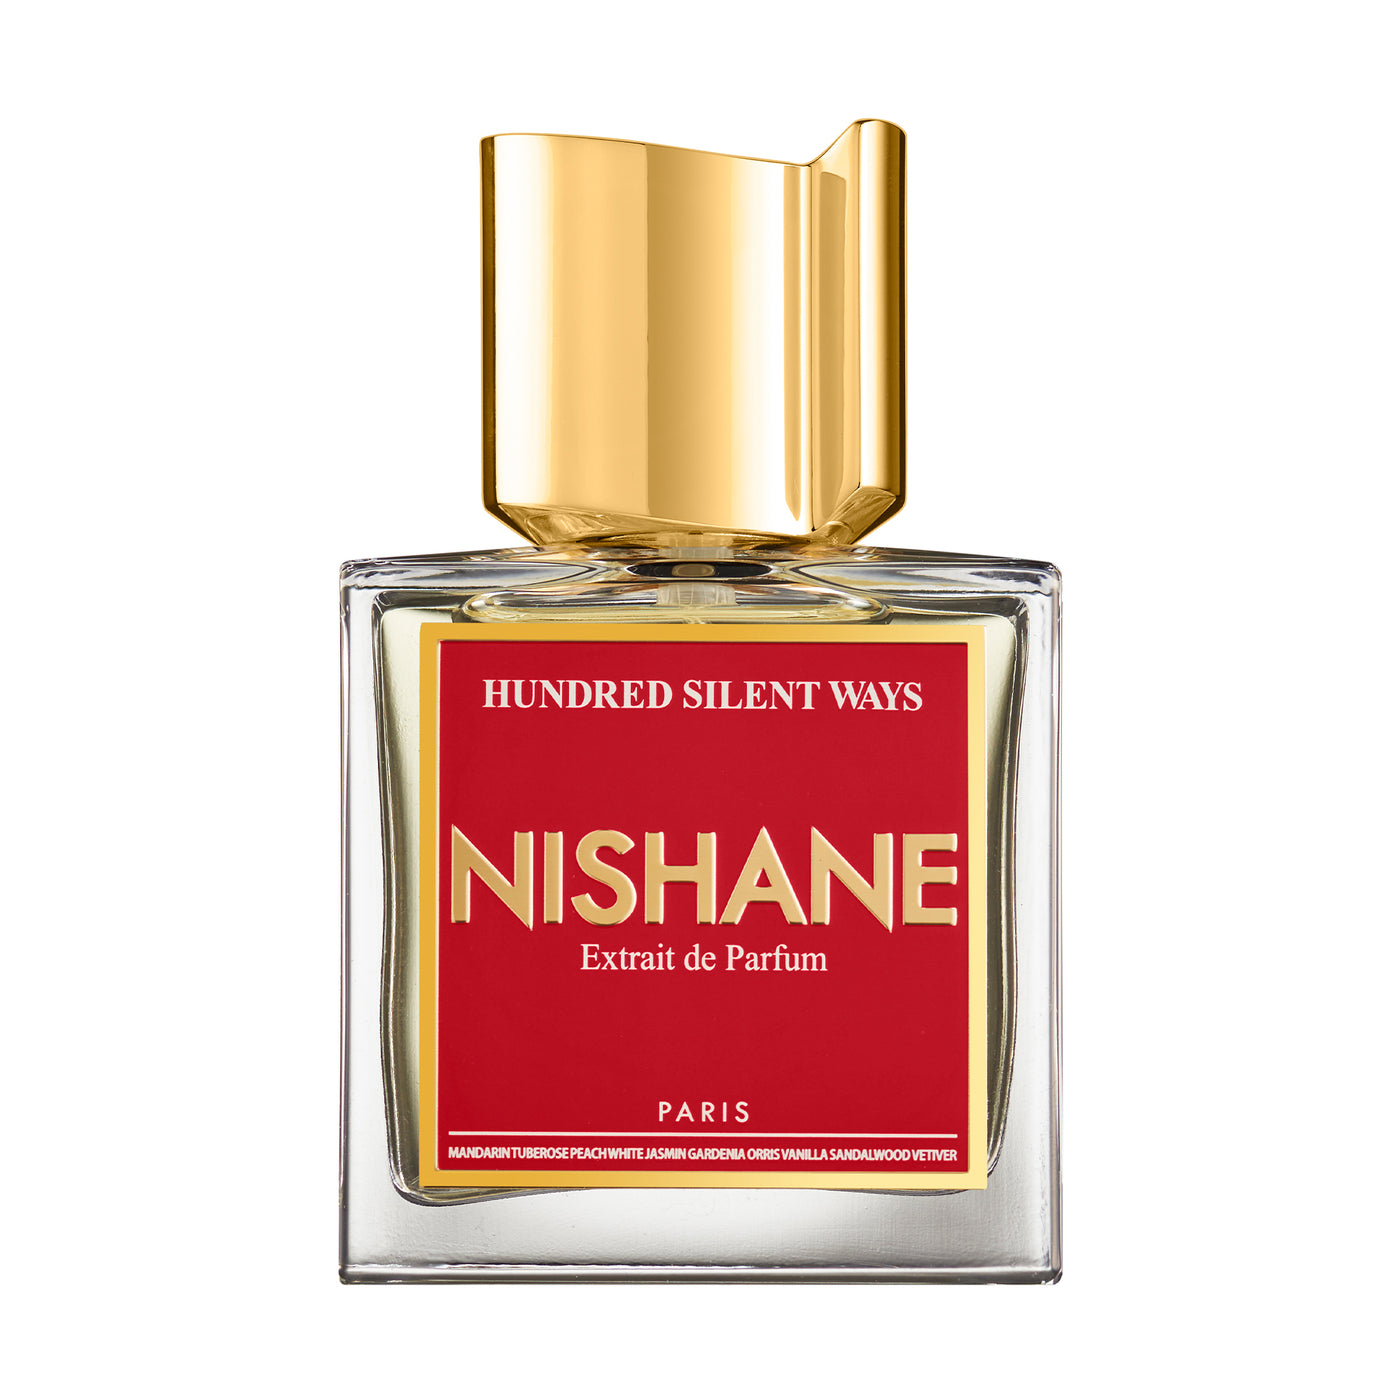 Nishane Hundred Silent Ways EXT 50ml